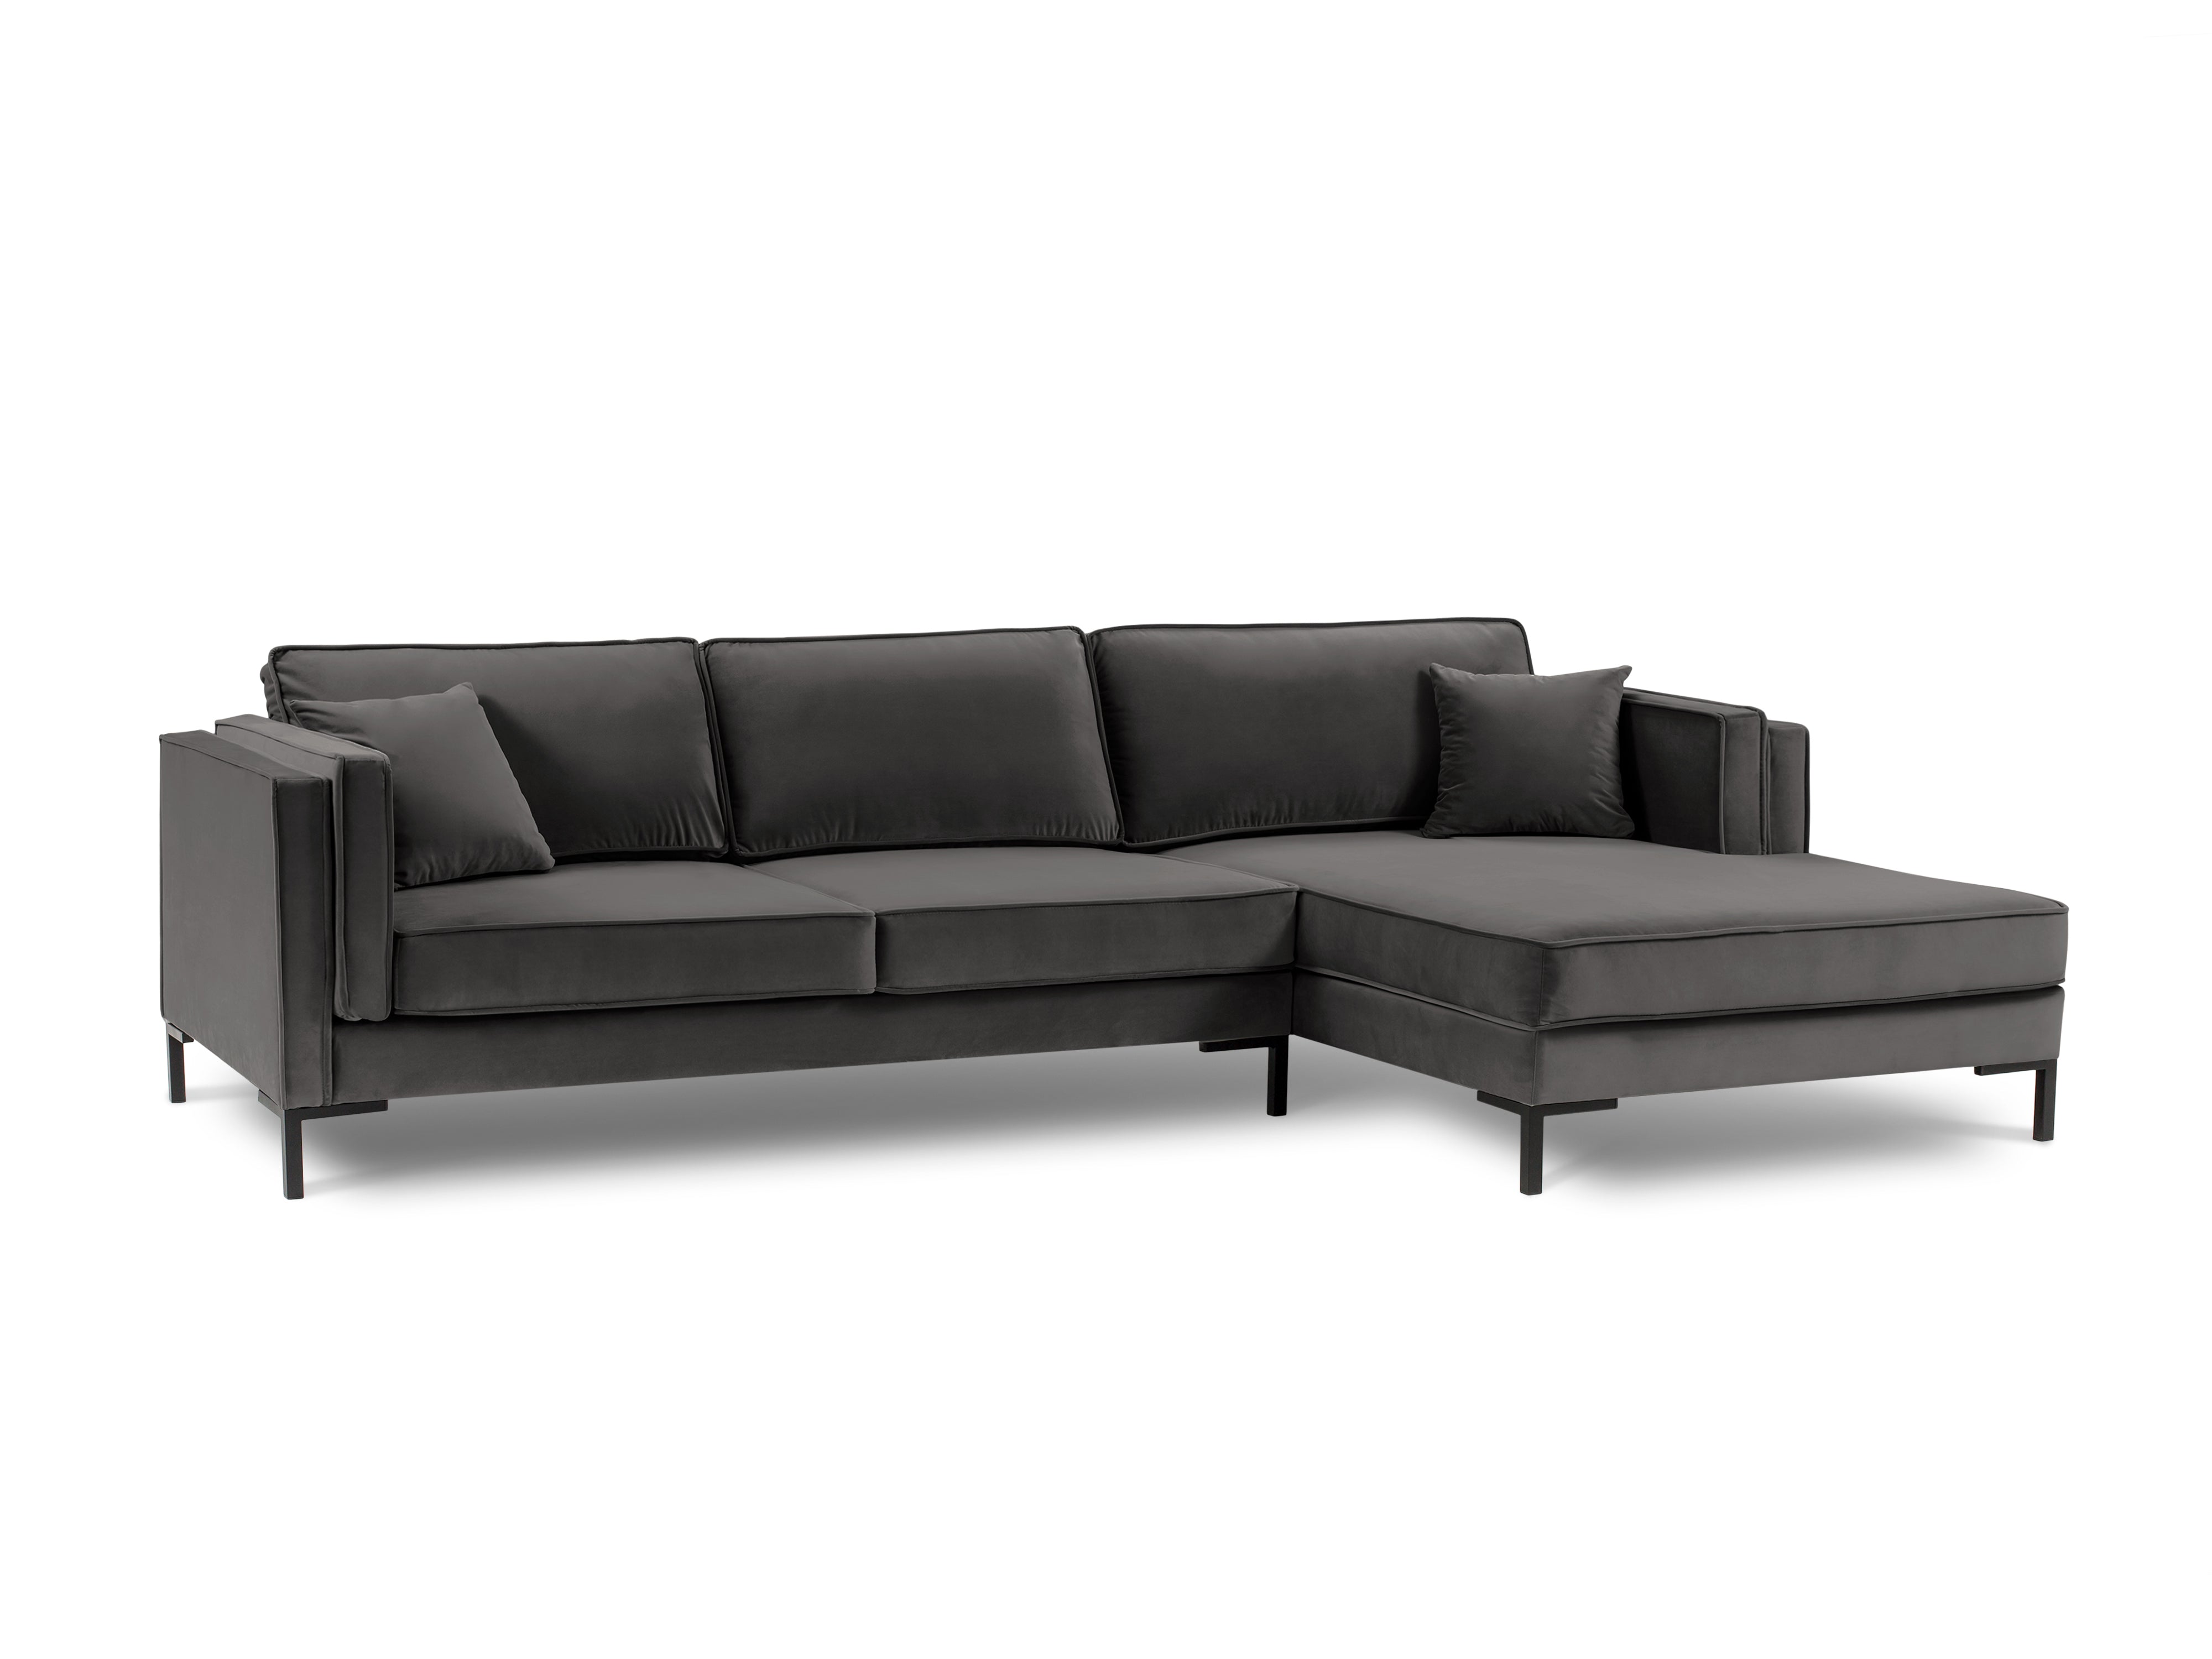 LUIS dark grey velvet right-hand corner sofa in with black base